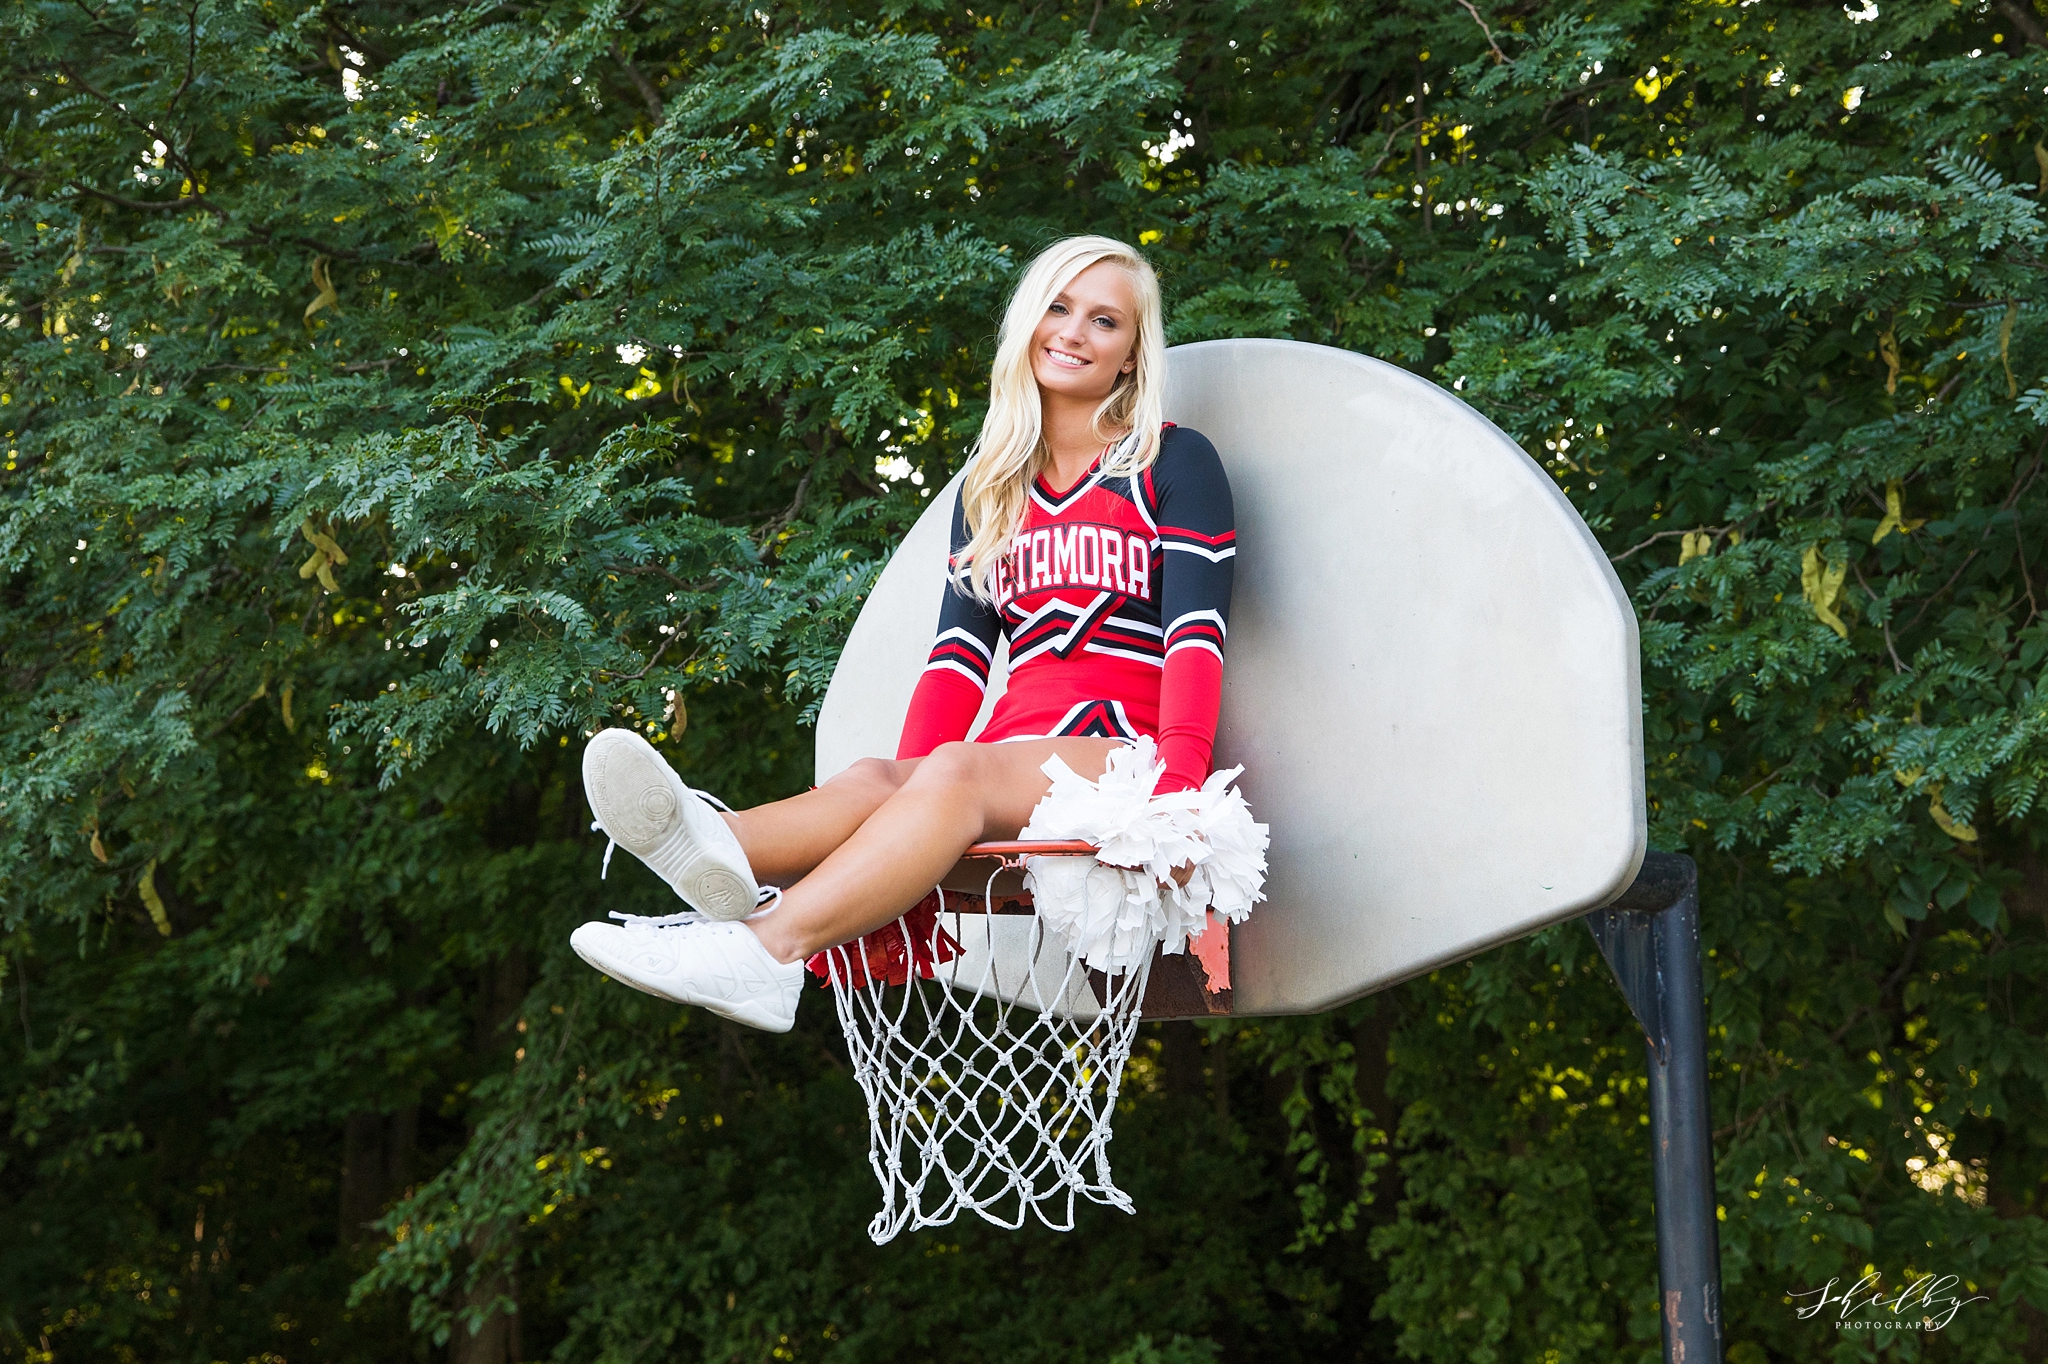 Metamora High School Cheerleader